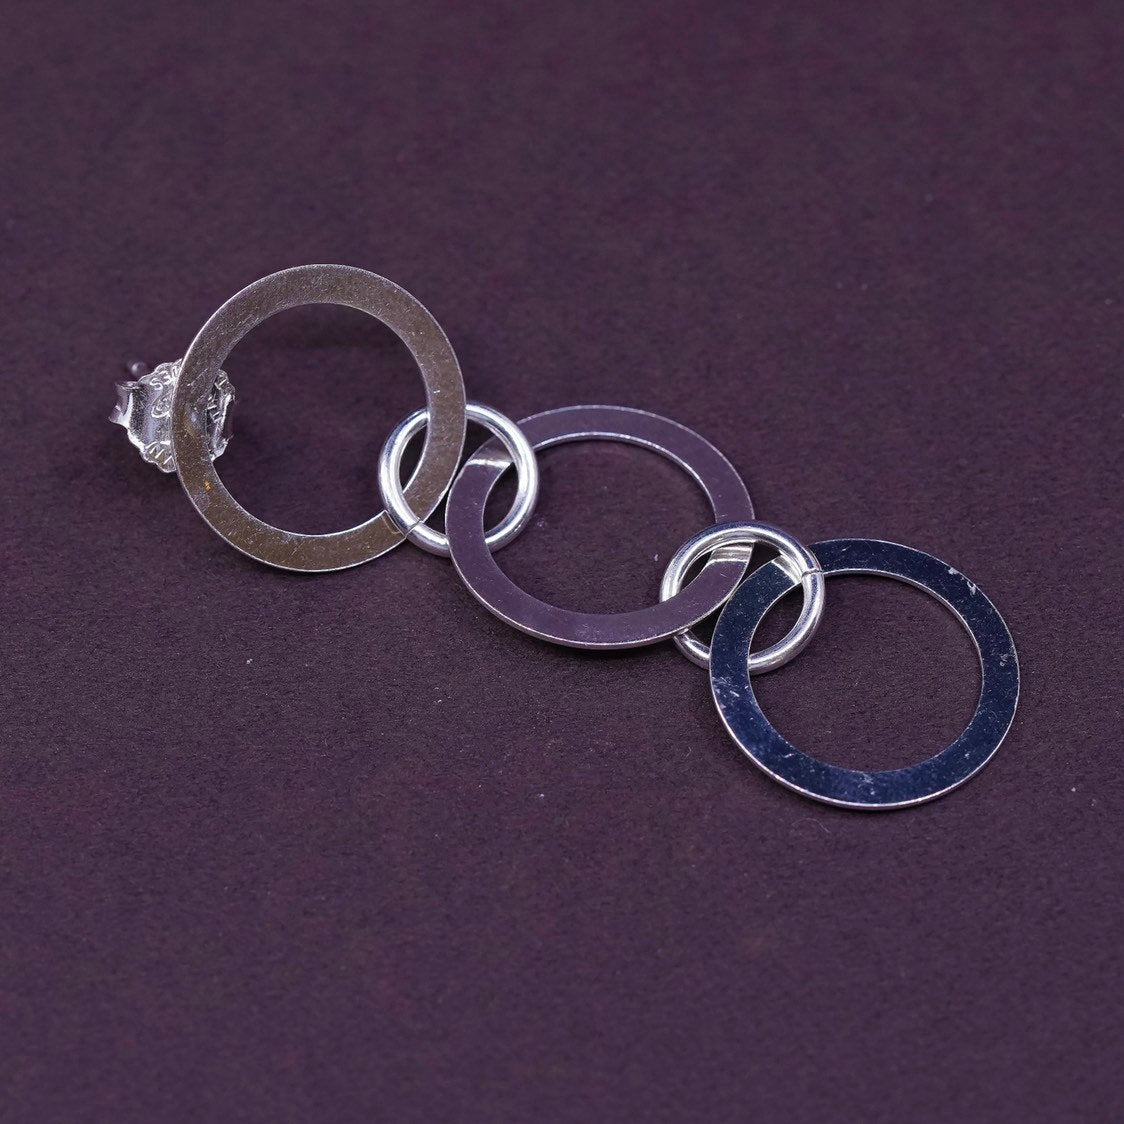 2” long, VTG Sterling silver handmade earrings, 925 entwined circles dangle